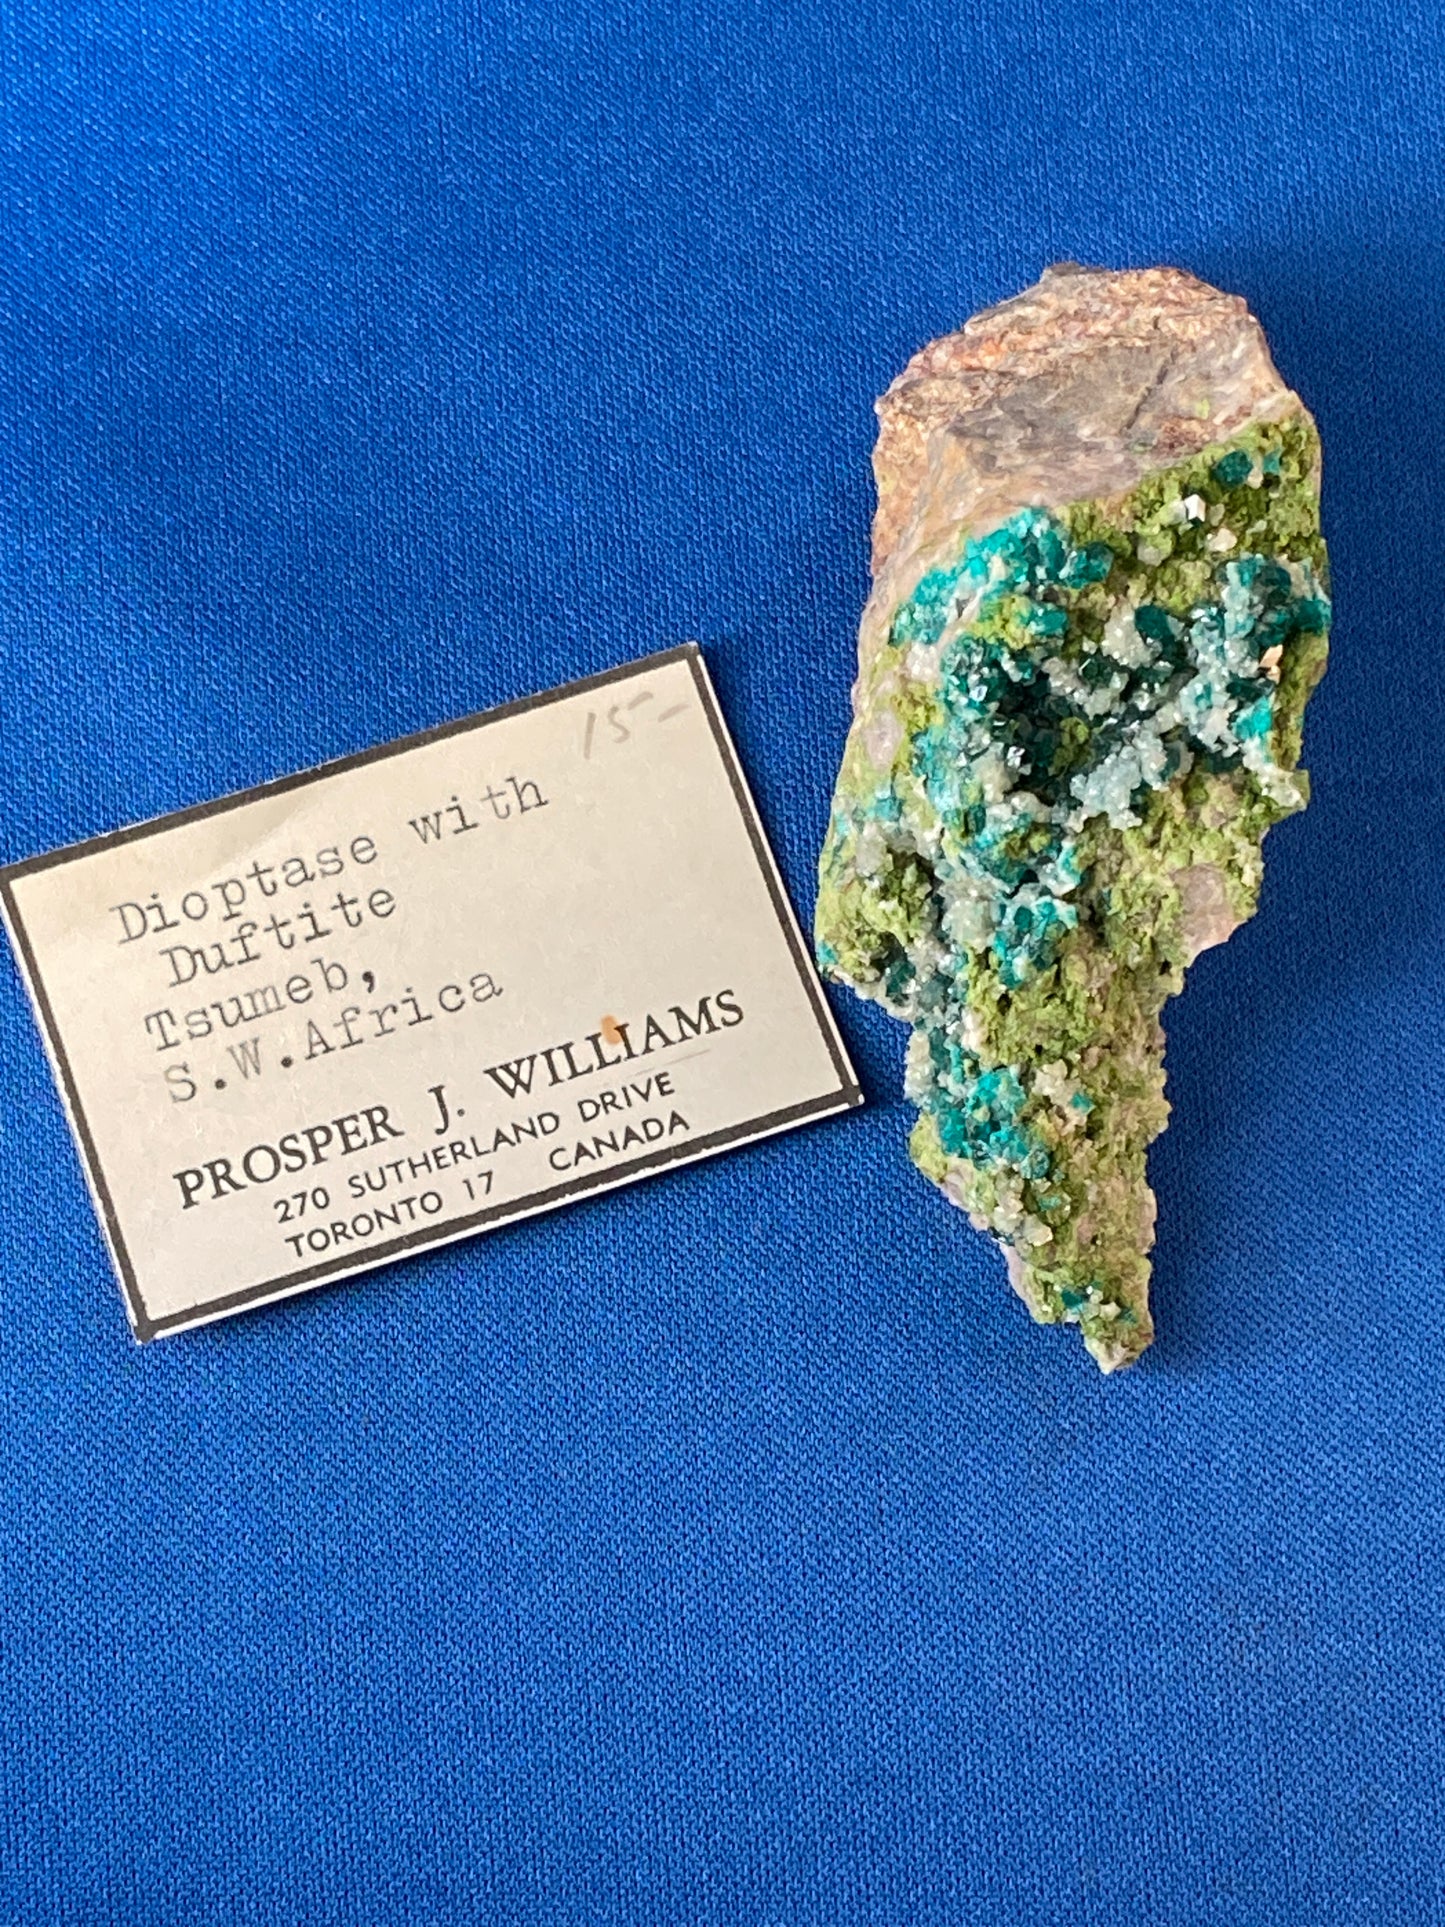 Dioptase, Duftite & Calcite, Tsumeb, Namibia (Ex Prosper J. Williams)